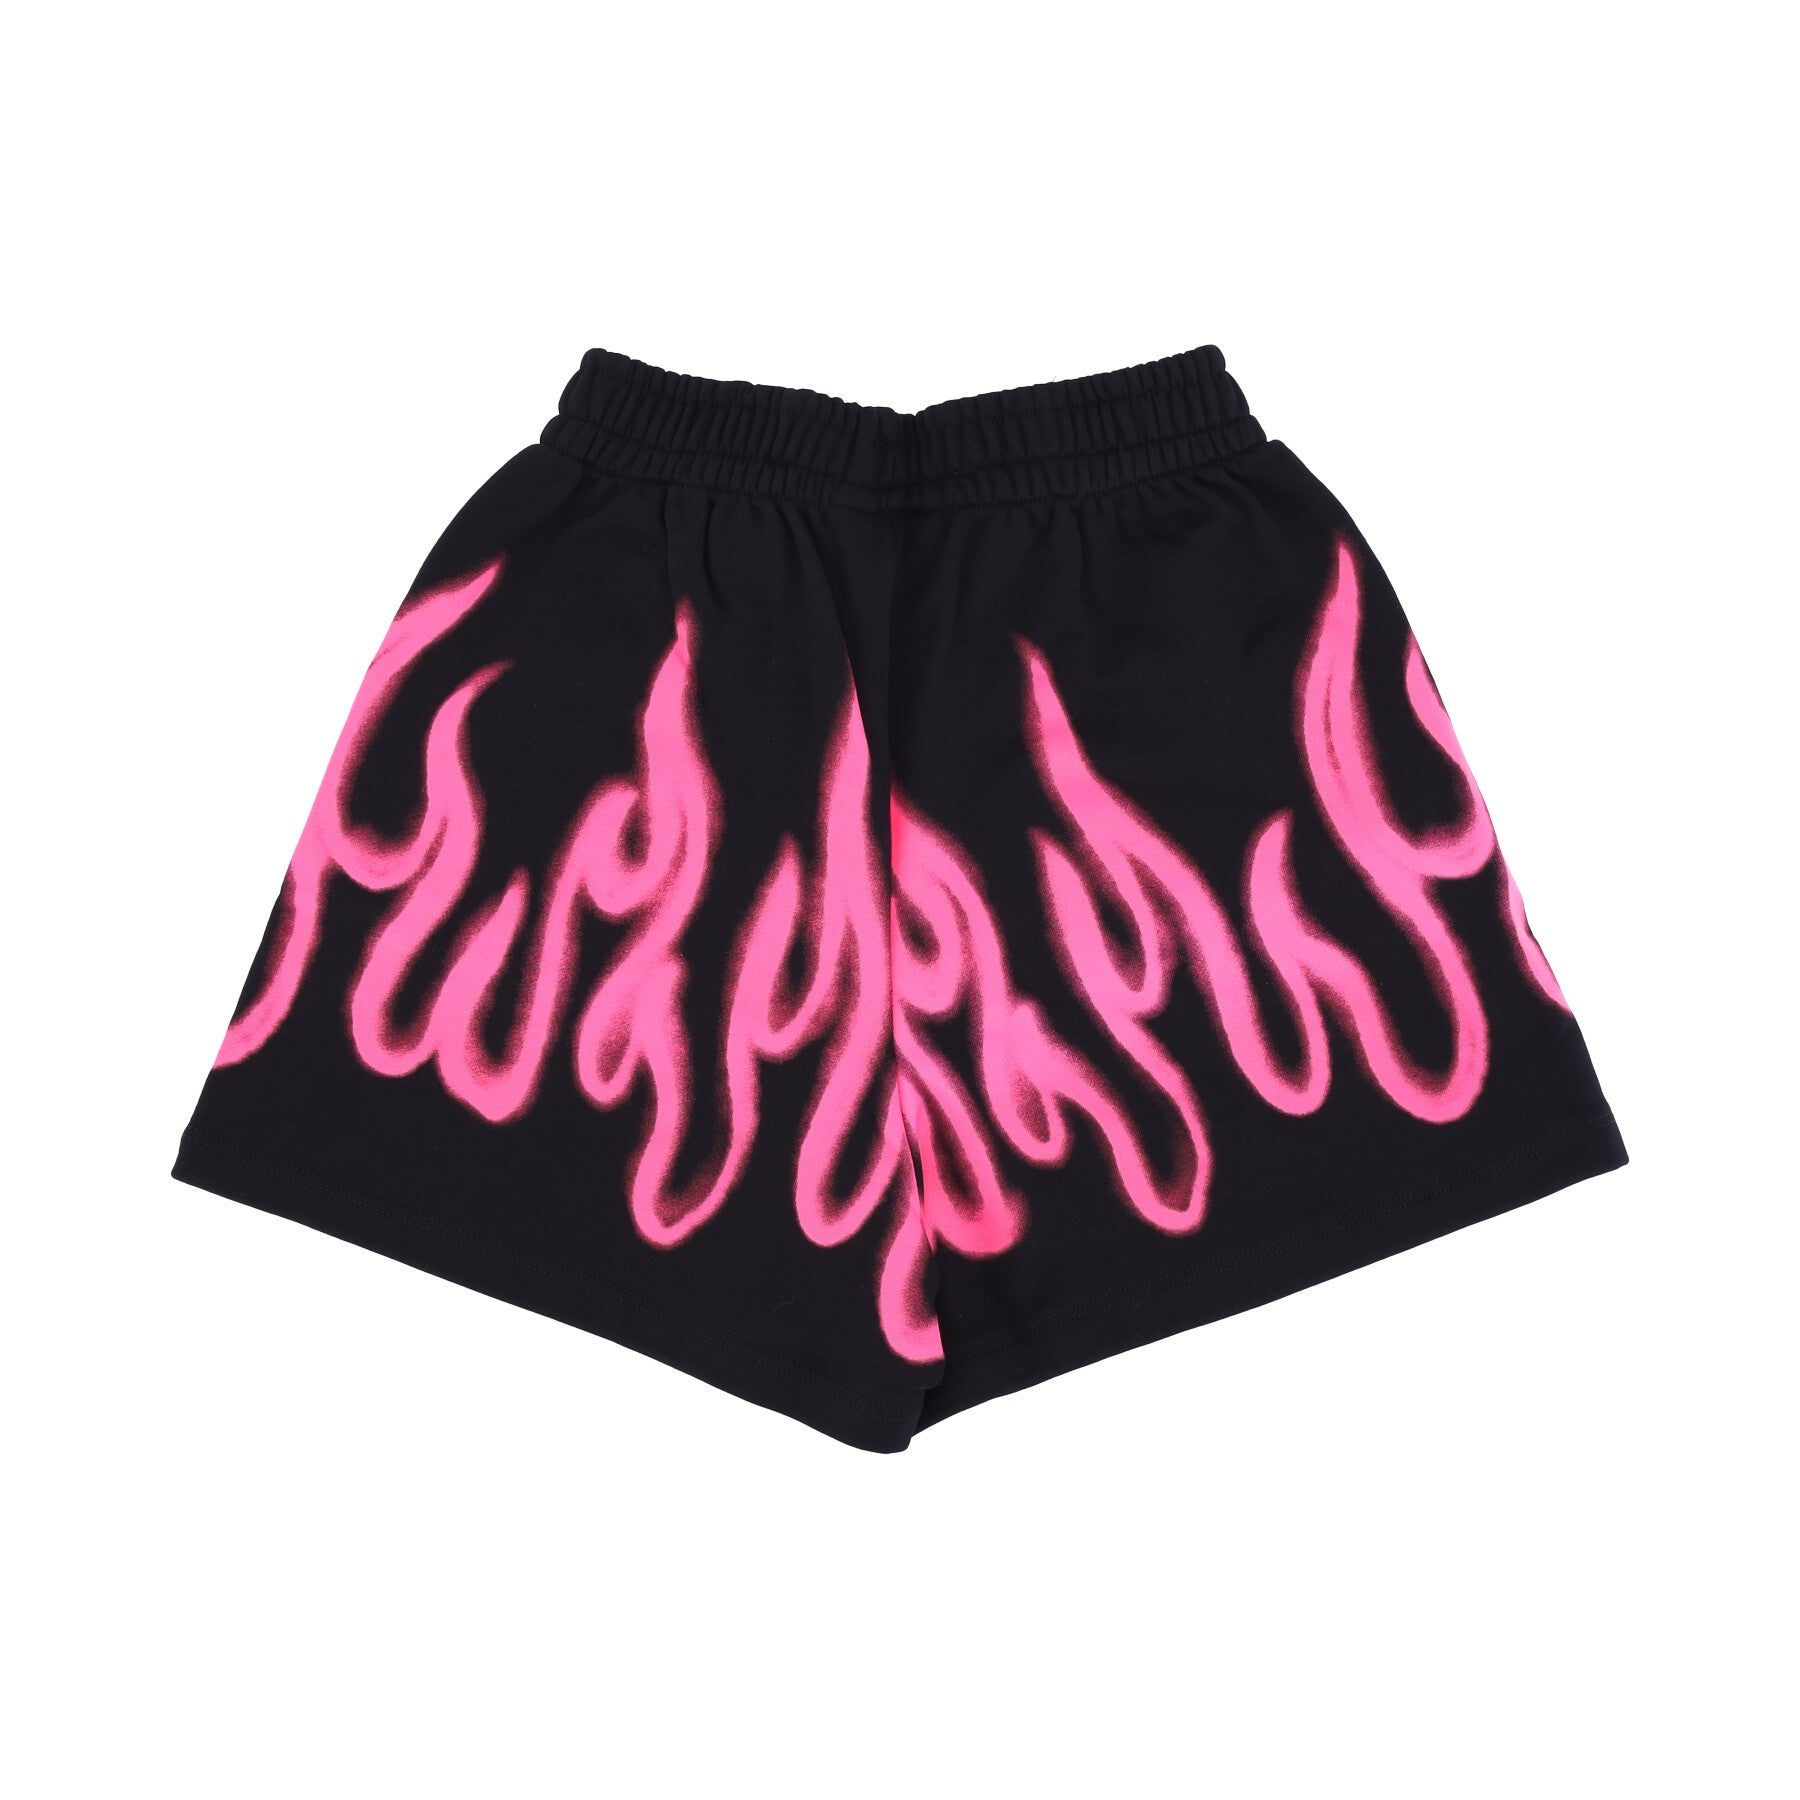 Spray Flames Shorts Women's Shorts Black/fuchsia